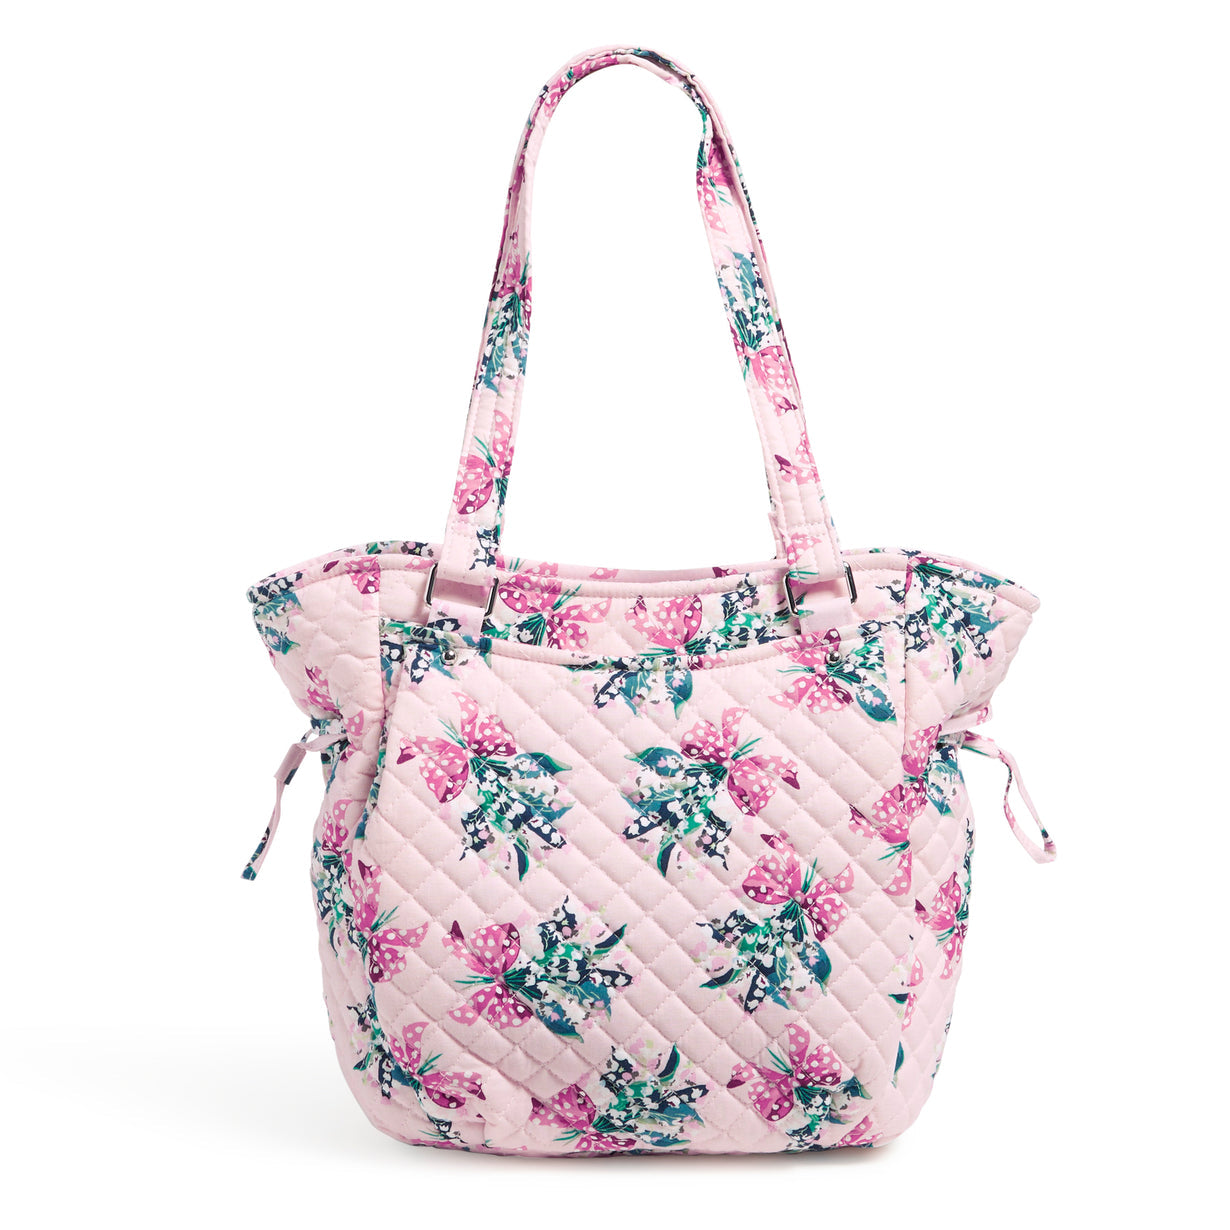 Vera Bradley glenna satchel in happiness returns pink pattern